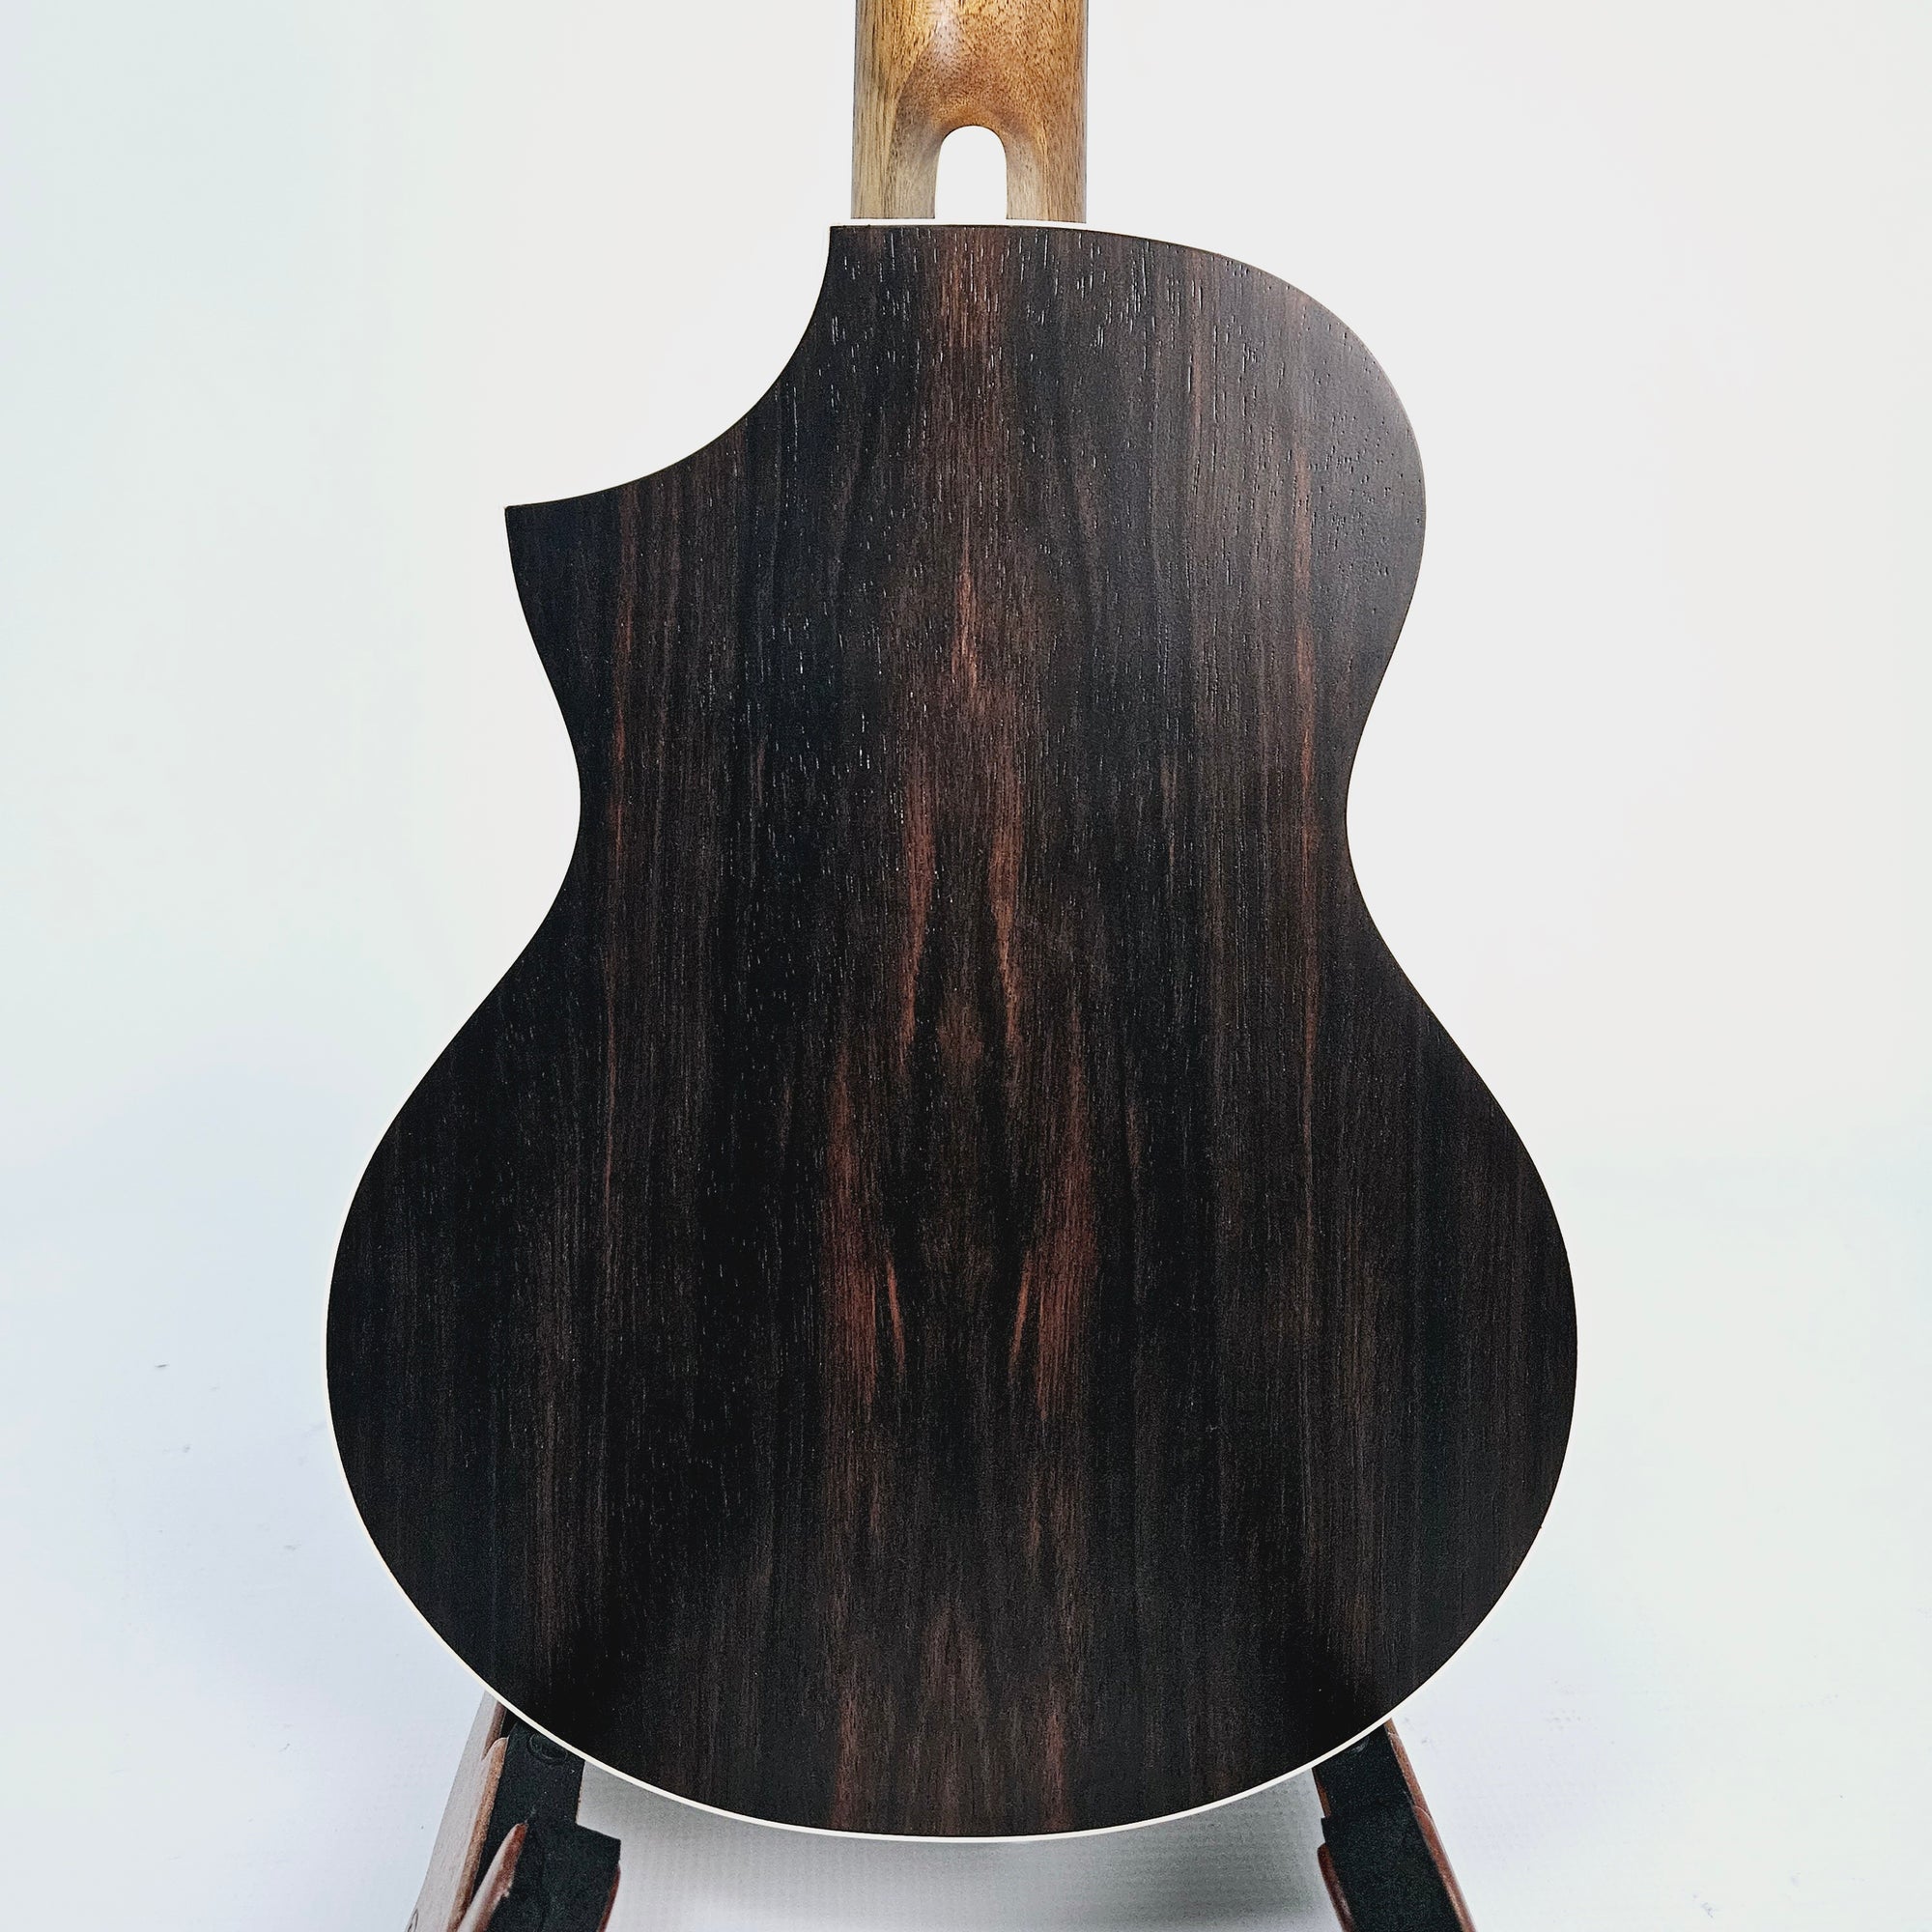 Ibanez Exotic Wood Piccolo Guitar - Dark Brown EWP13DBO Body Back